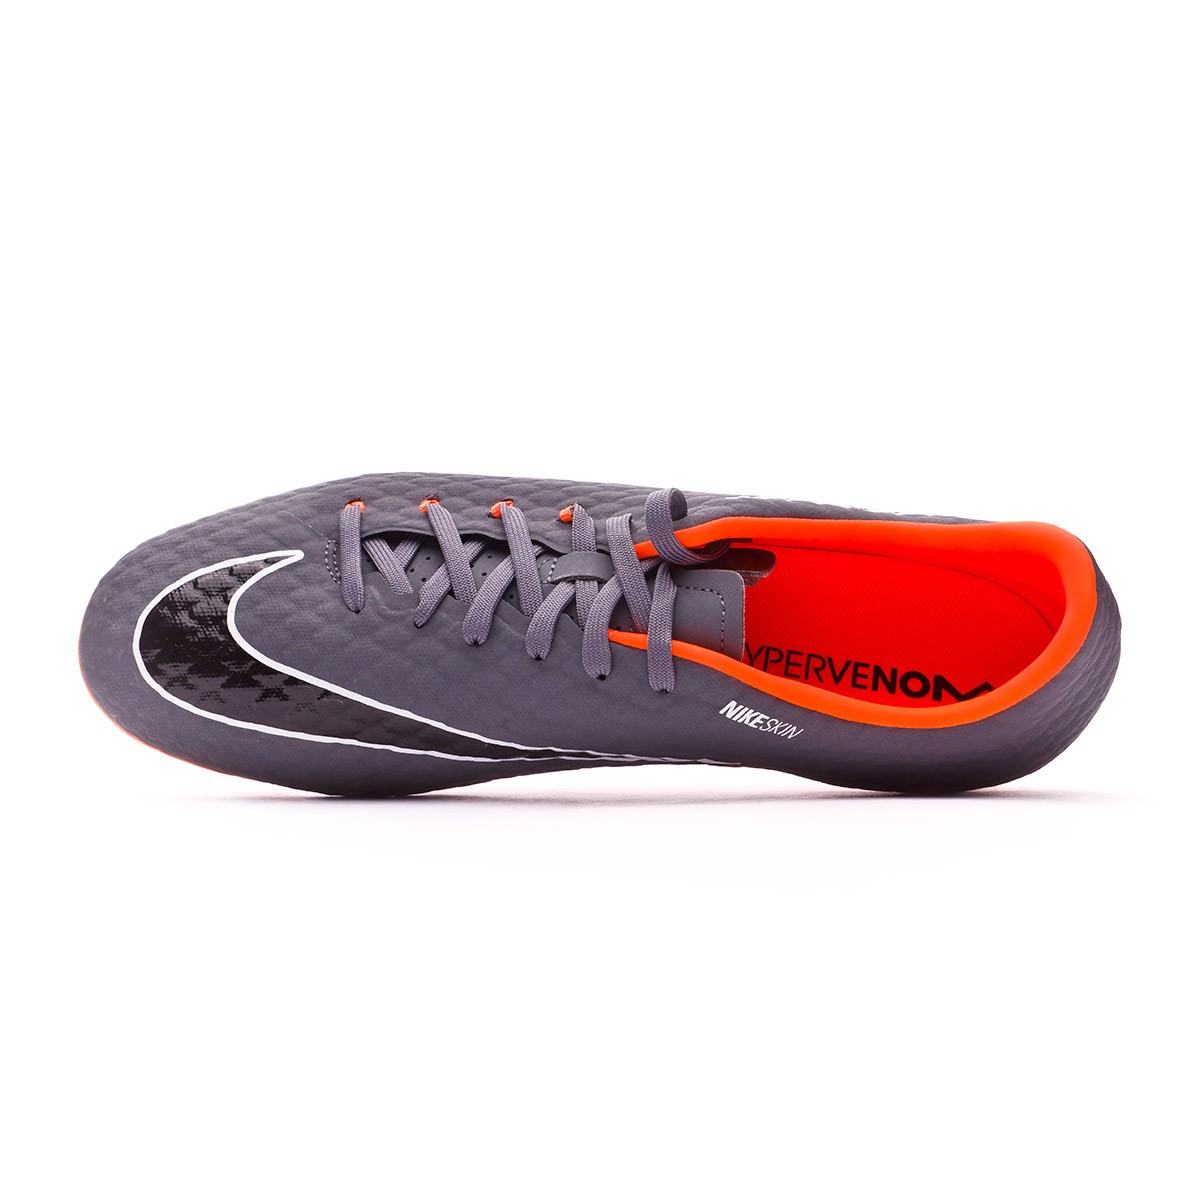 Nike Hypervenom Pro IC Size 10 Mens Indoor Soccer or